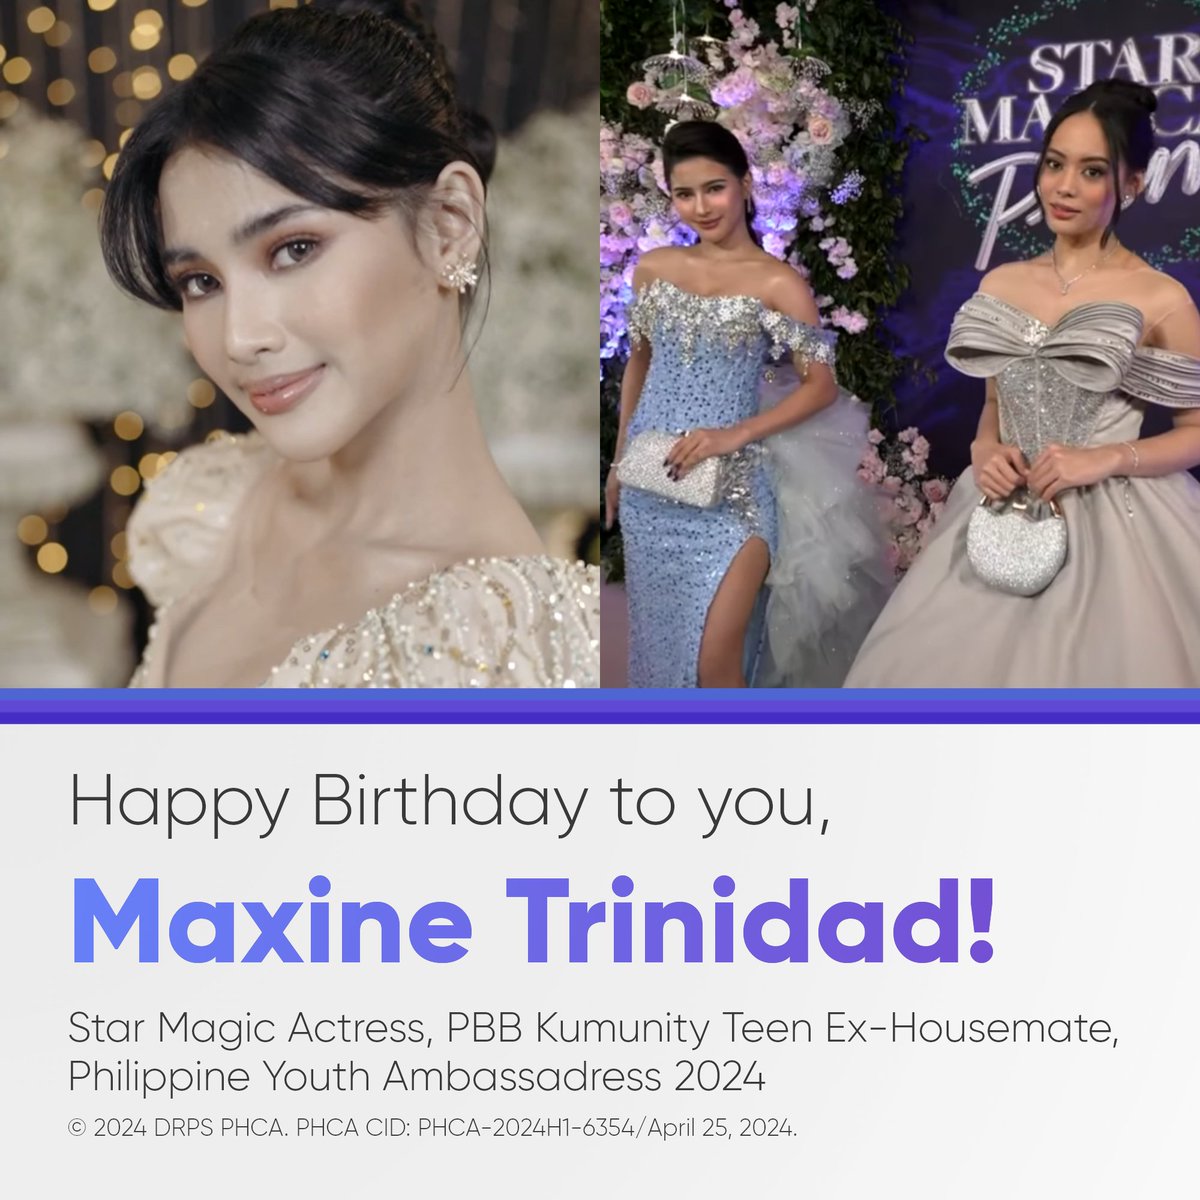 HAPPY BIRTHDAY: #MaxineTrinidad, one of the artist from Star Magic, PBB Alumna, TV and Movie Actress, and the Philippine Youth Ambassadress 2024!

She was born on April 26, 2003. She's 21 today!

© 2024 DRPS PHCA. PHCA CID: PHCA-2024H1-6354/April 25, 2024.